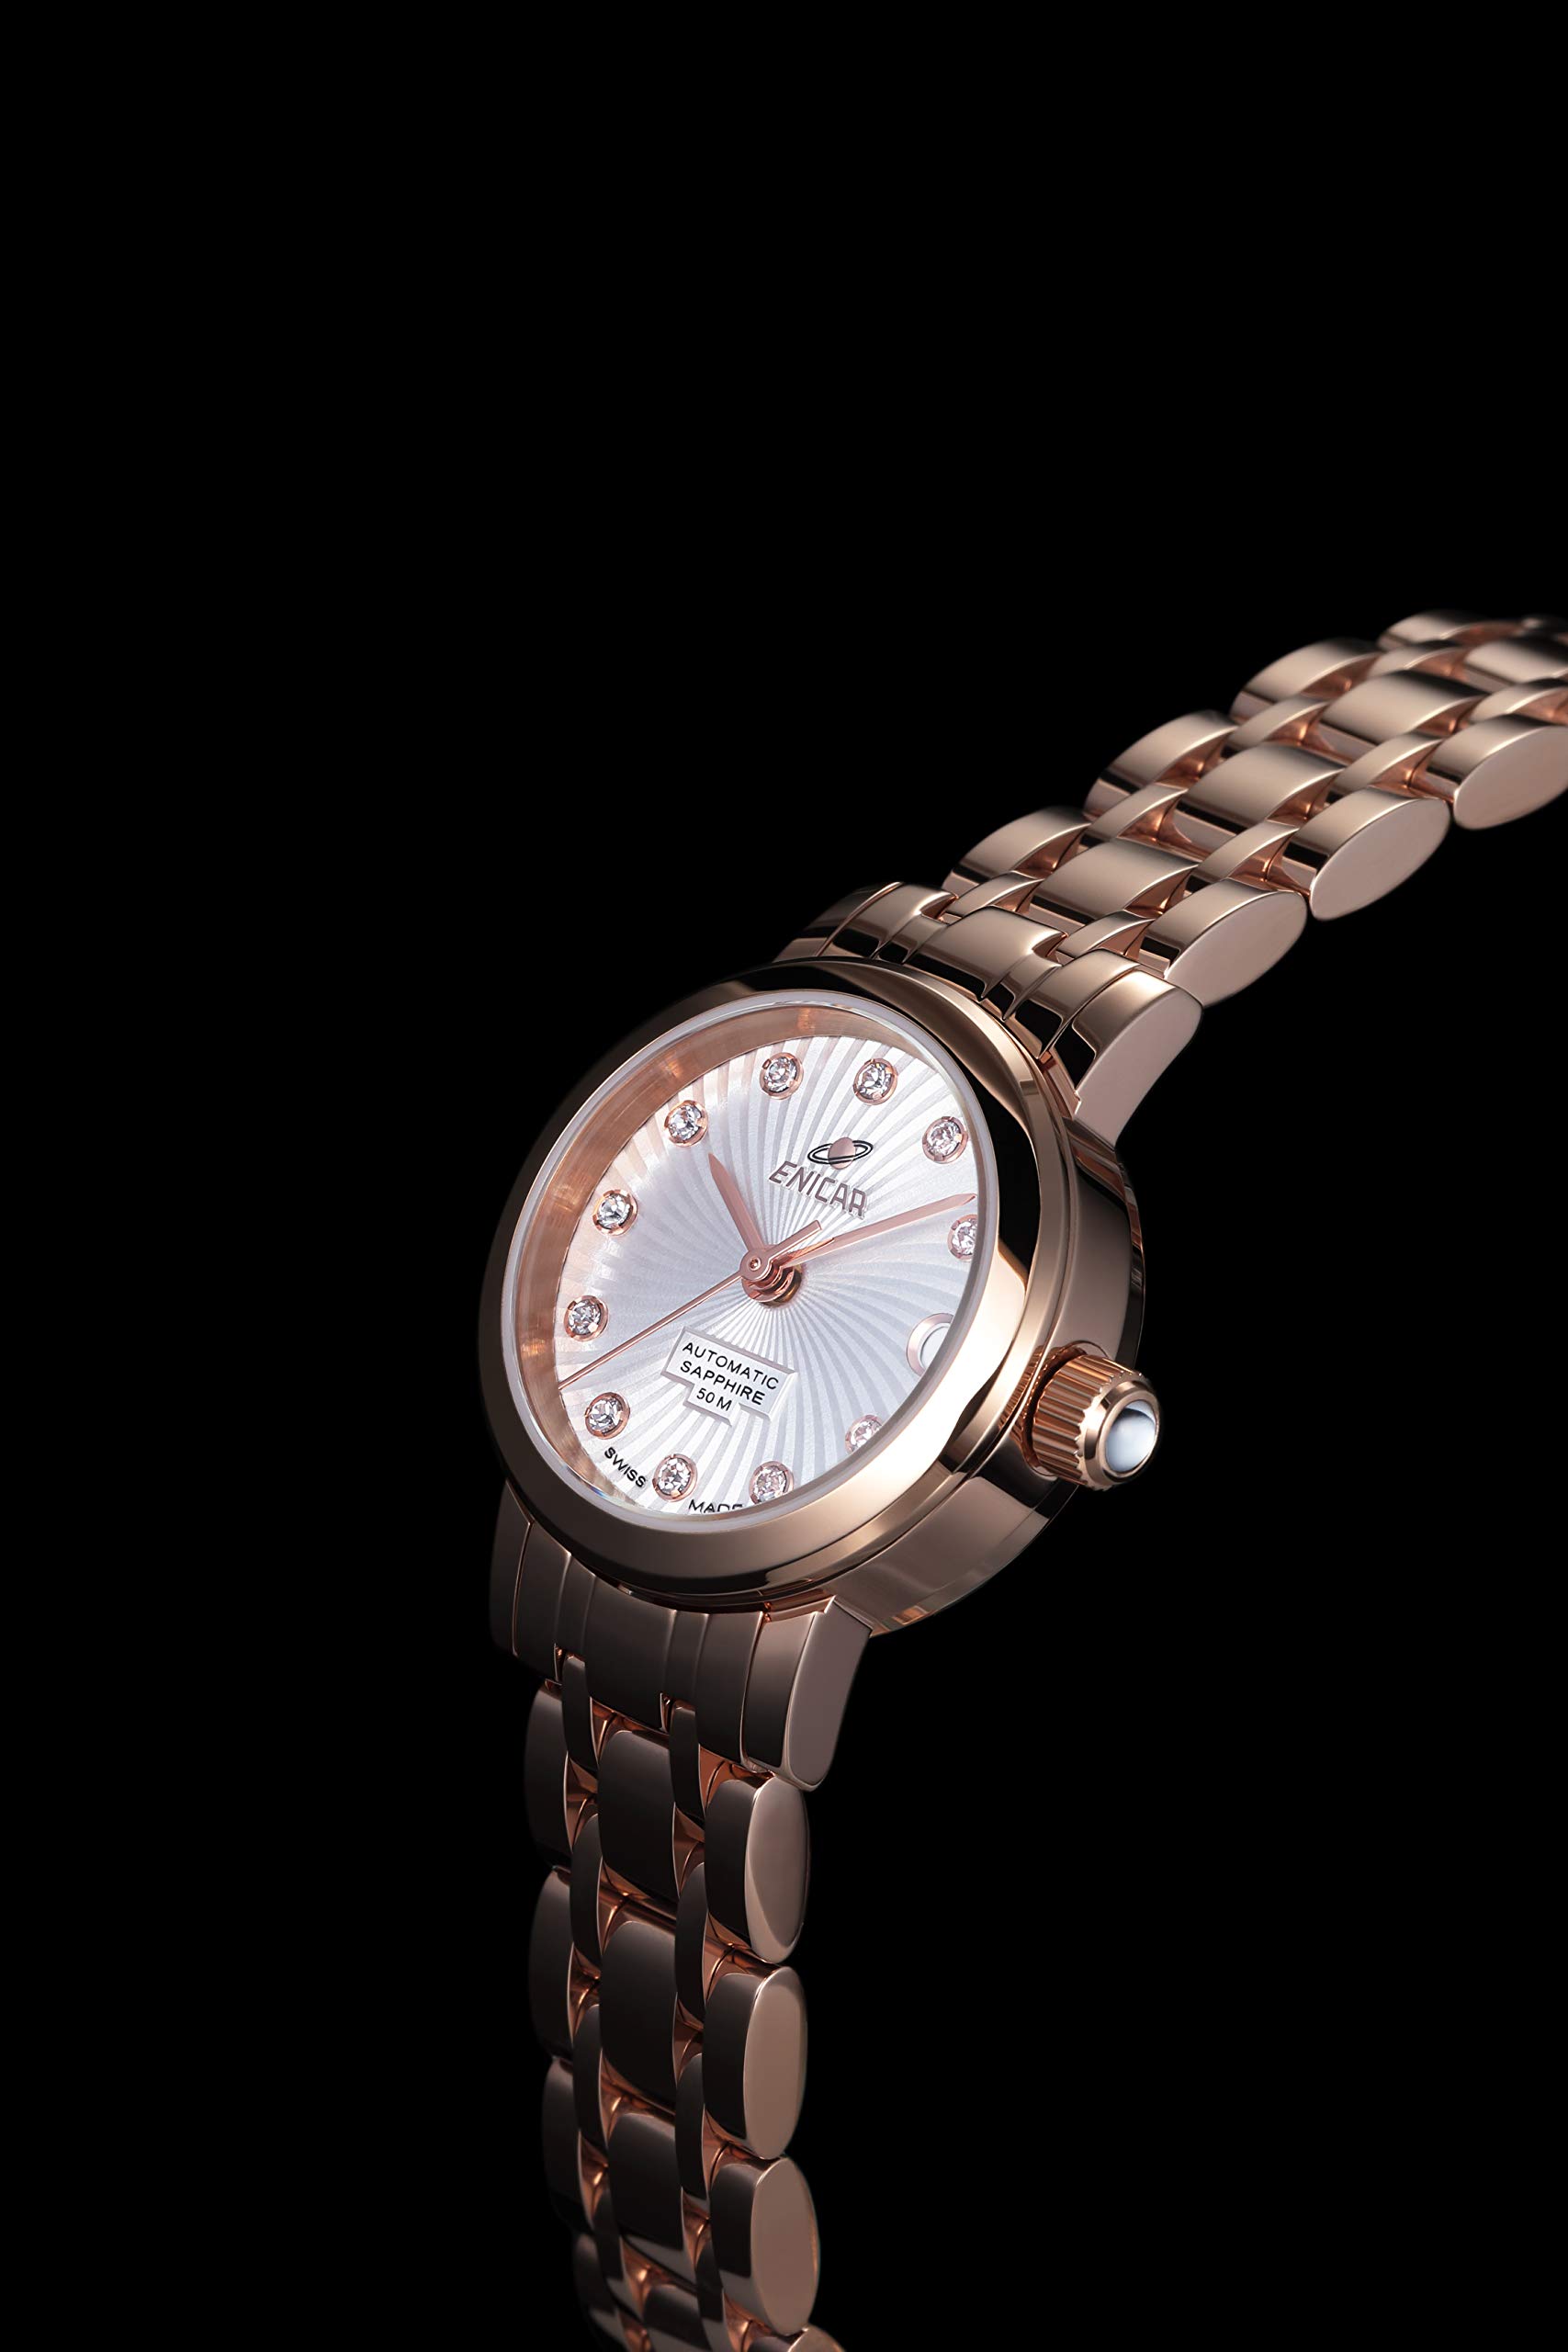 ENICAR Women's Swiss Automatic Watch (Model No.: 778-50-339P)